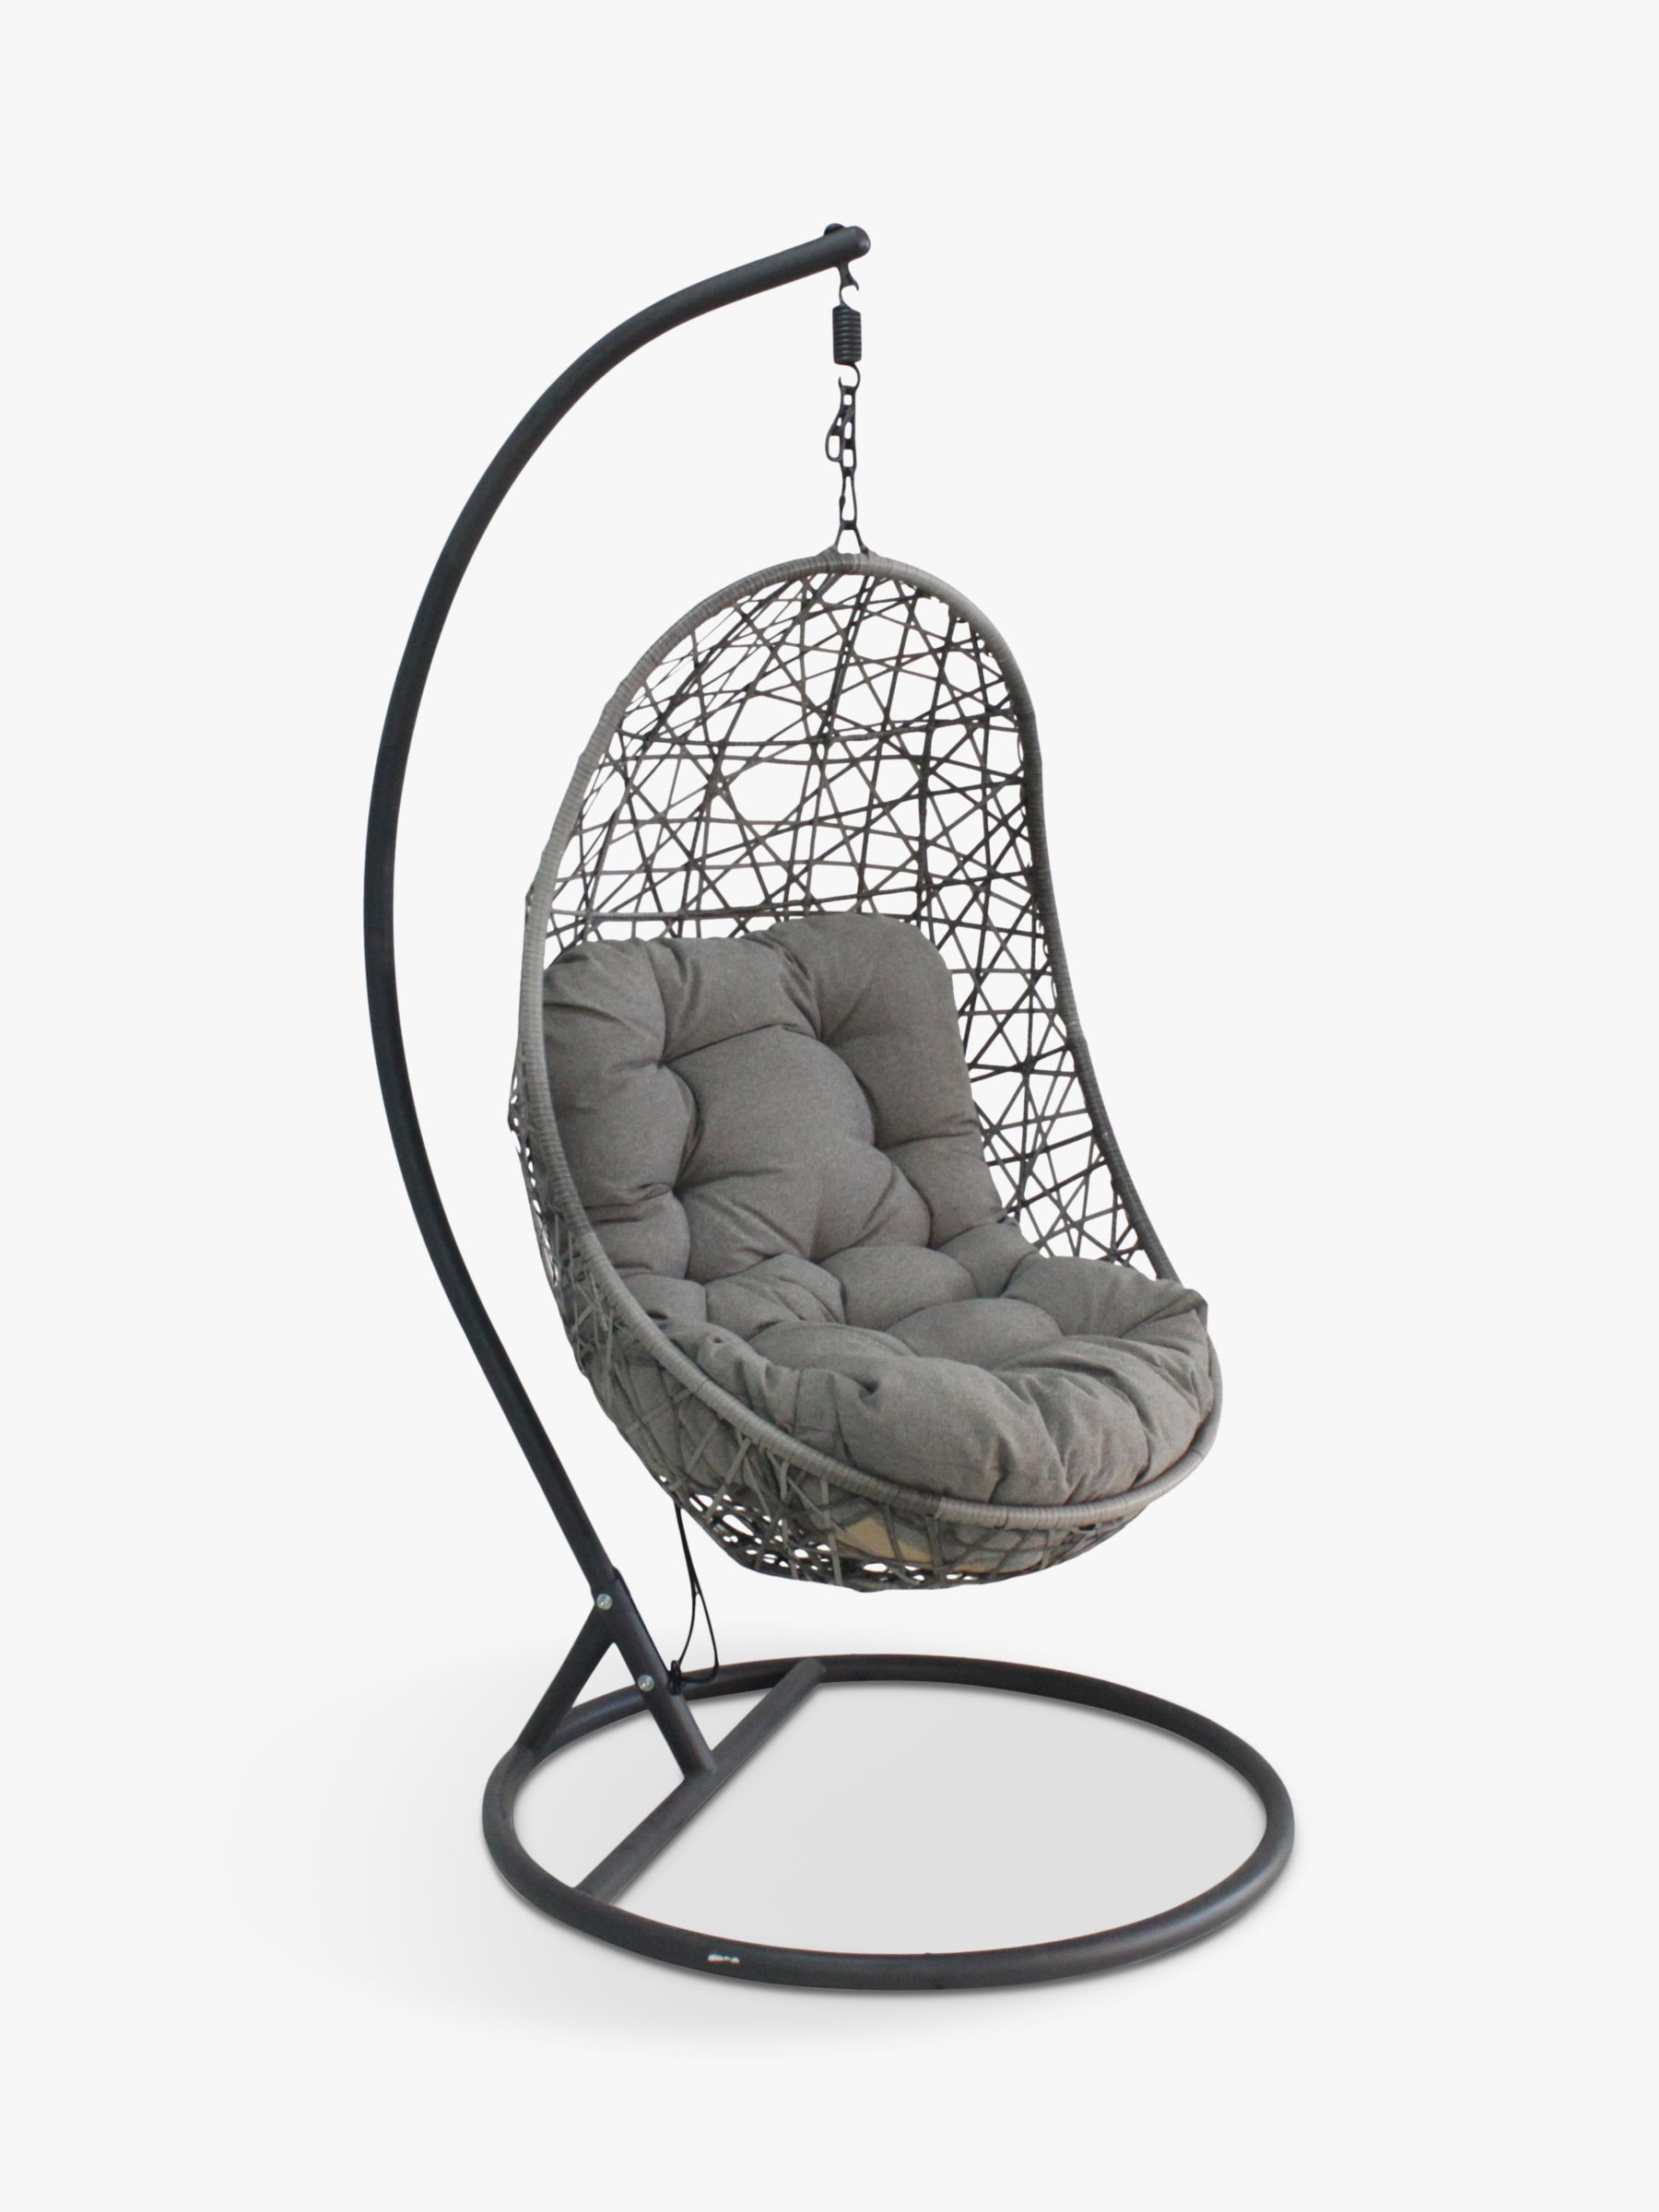 LG Outdoor Monaco Garden Swing Seat Egg Chair